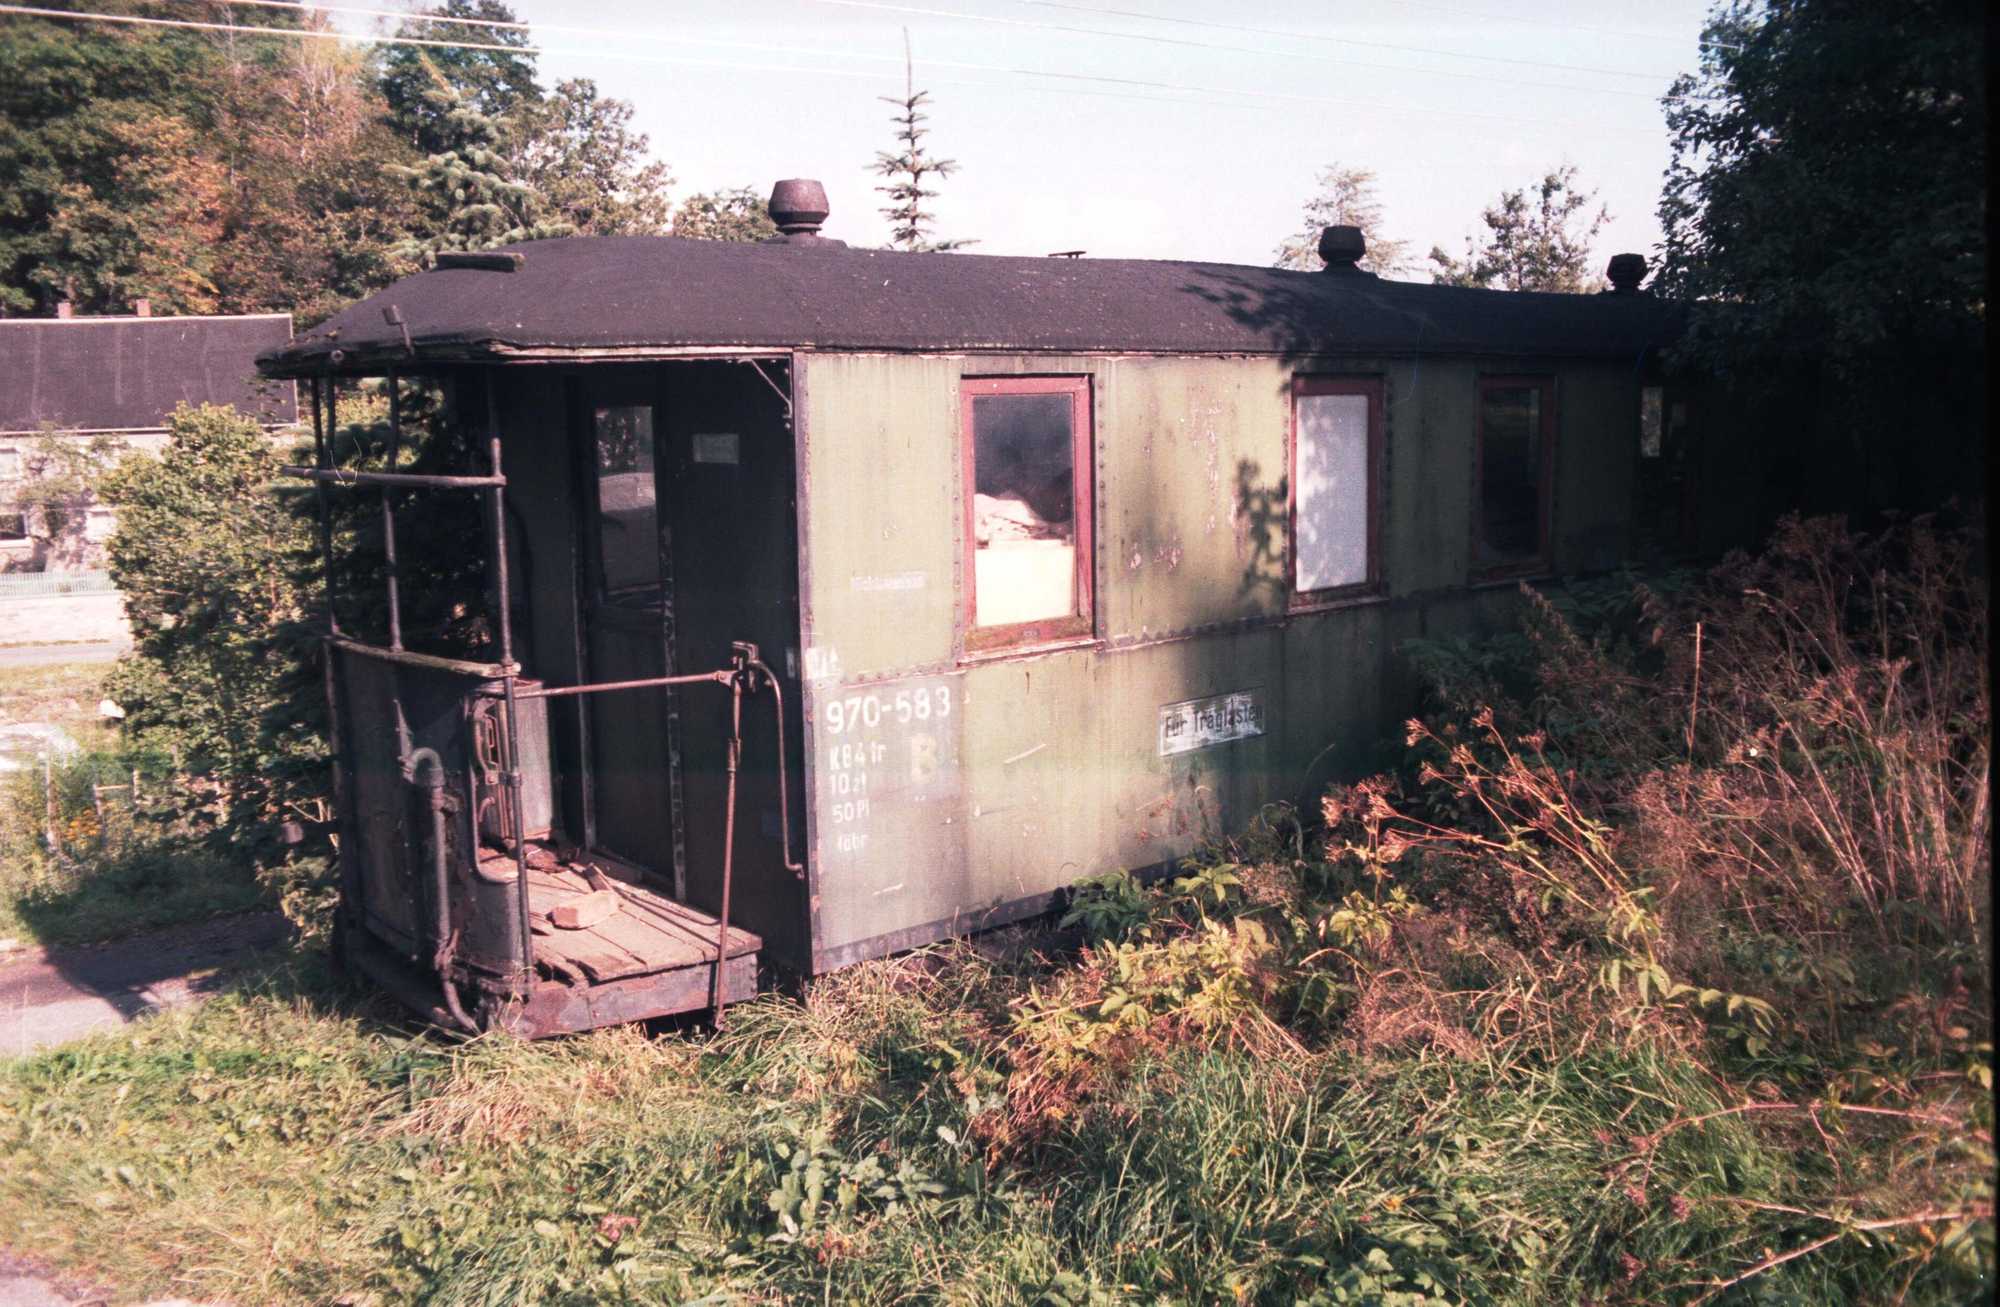 September 1991 - Wagenkasten 970-583 in Zethau.